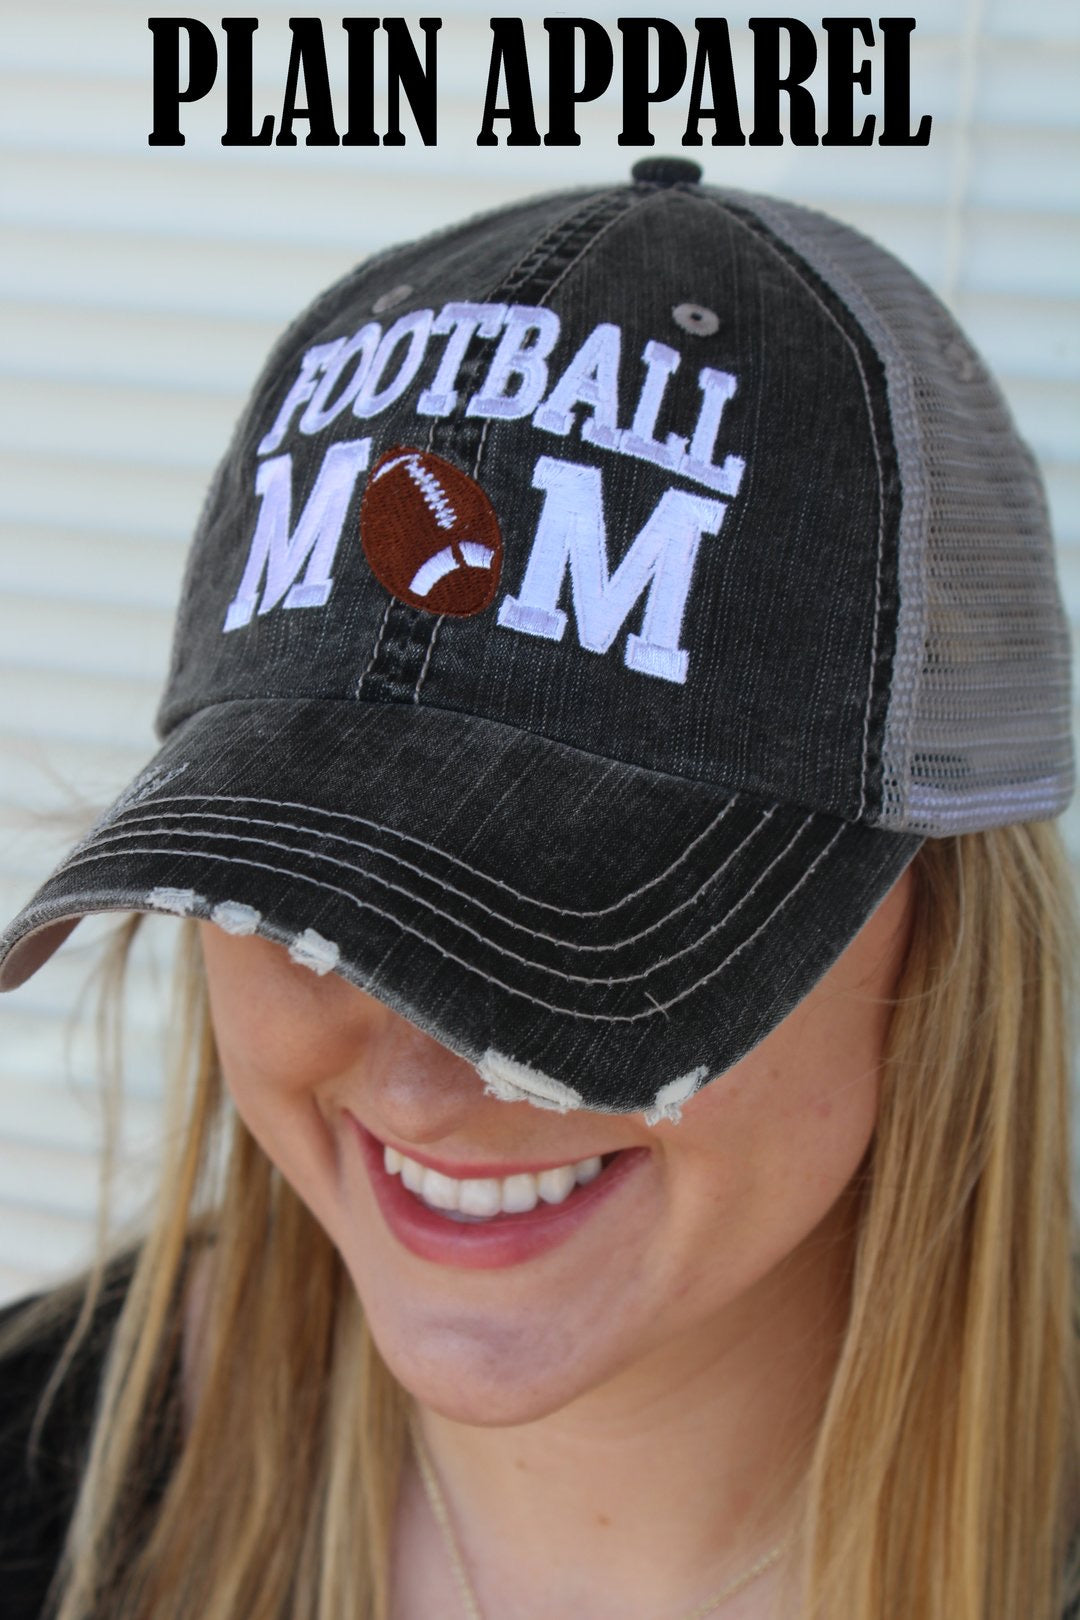 Football mom hat